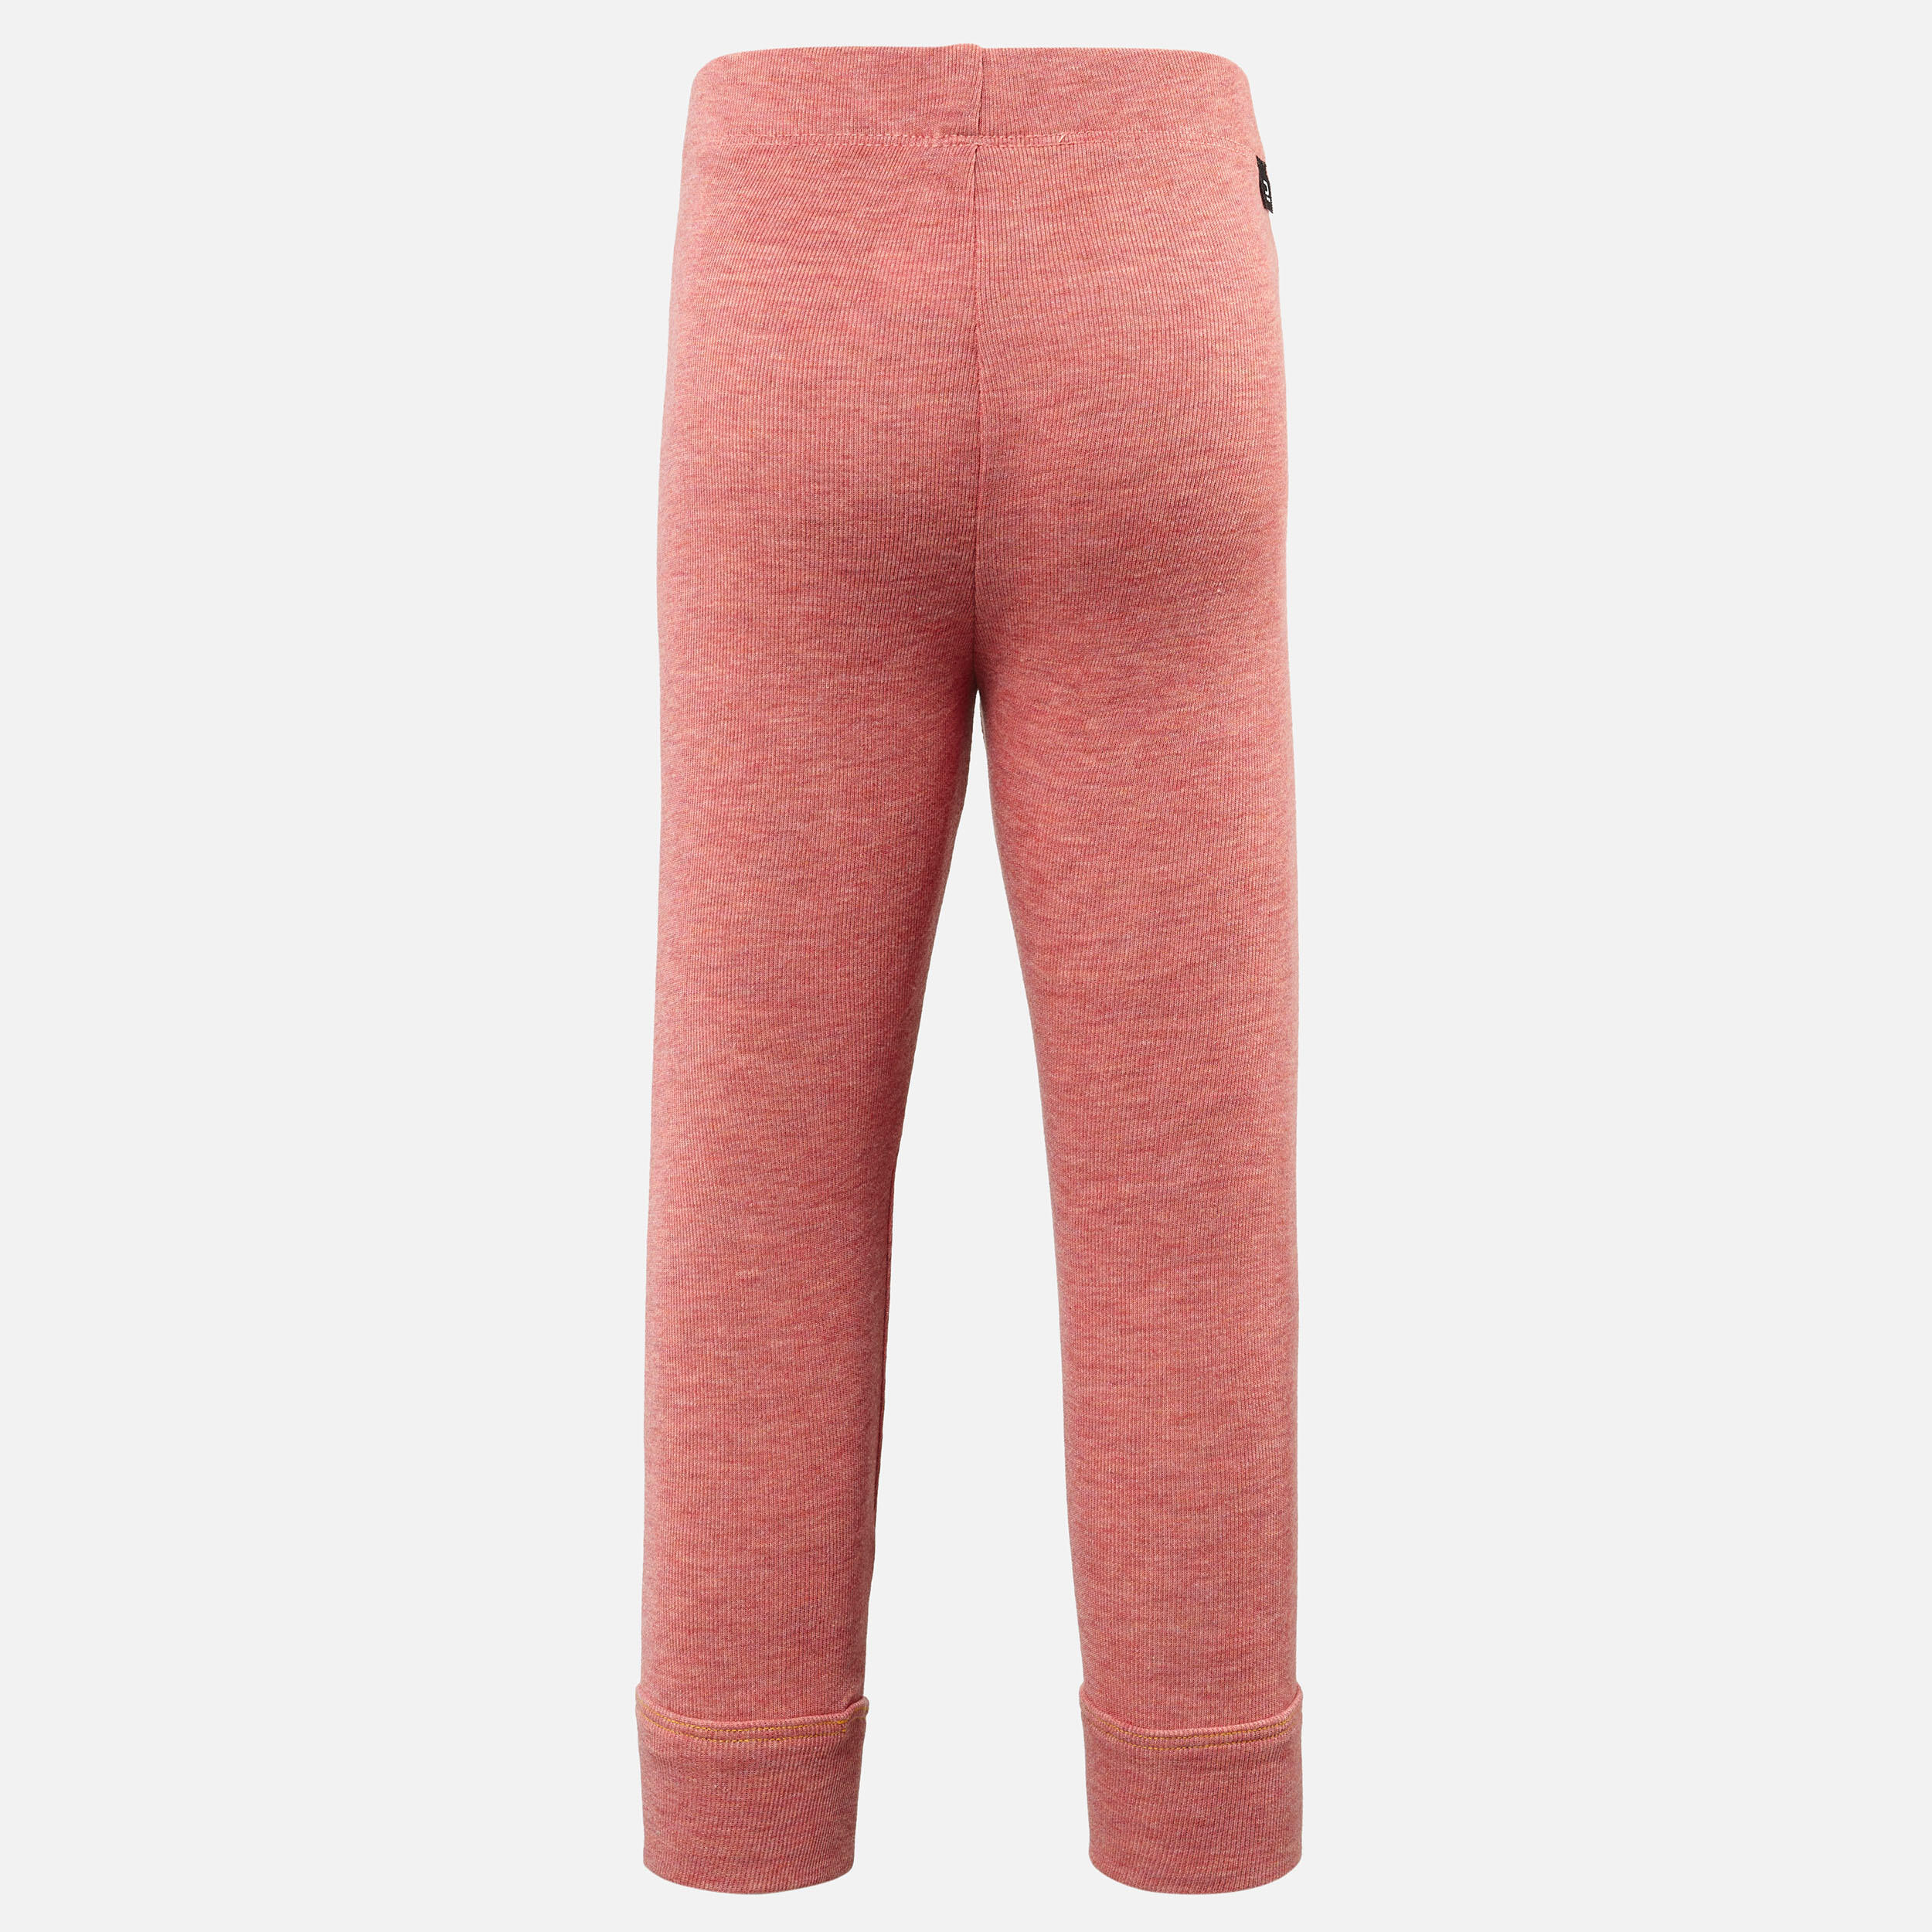 Base layer trousers, Baby ski leggings - WARM pink 4/7